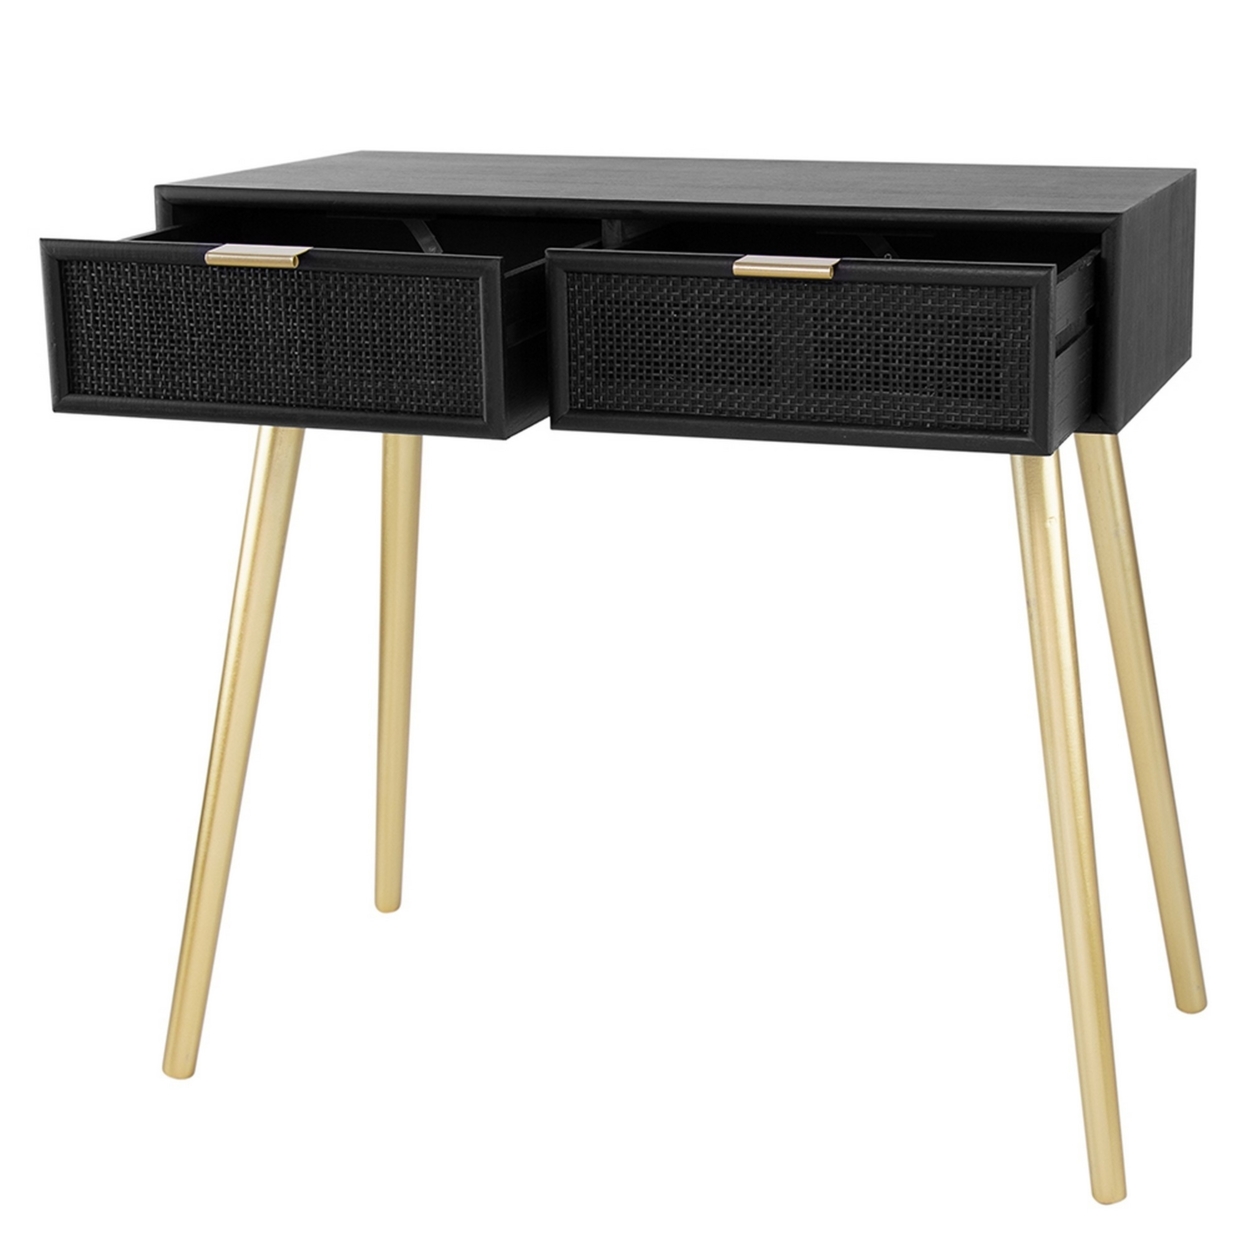 Pia 32 Inch Wood Console Table, 2 Drawers, Woven Rattan Design, Black, Gold, Saltoro Sherpi